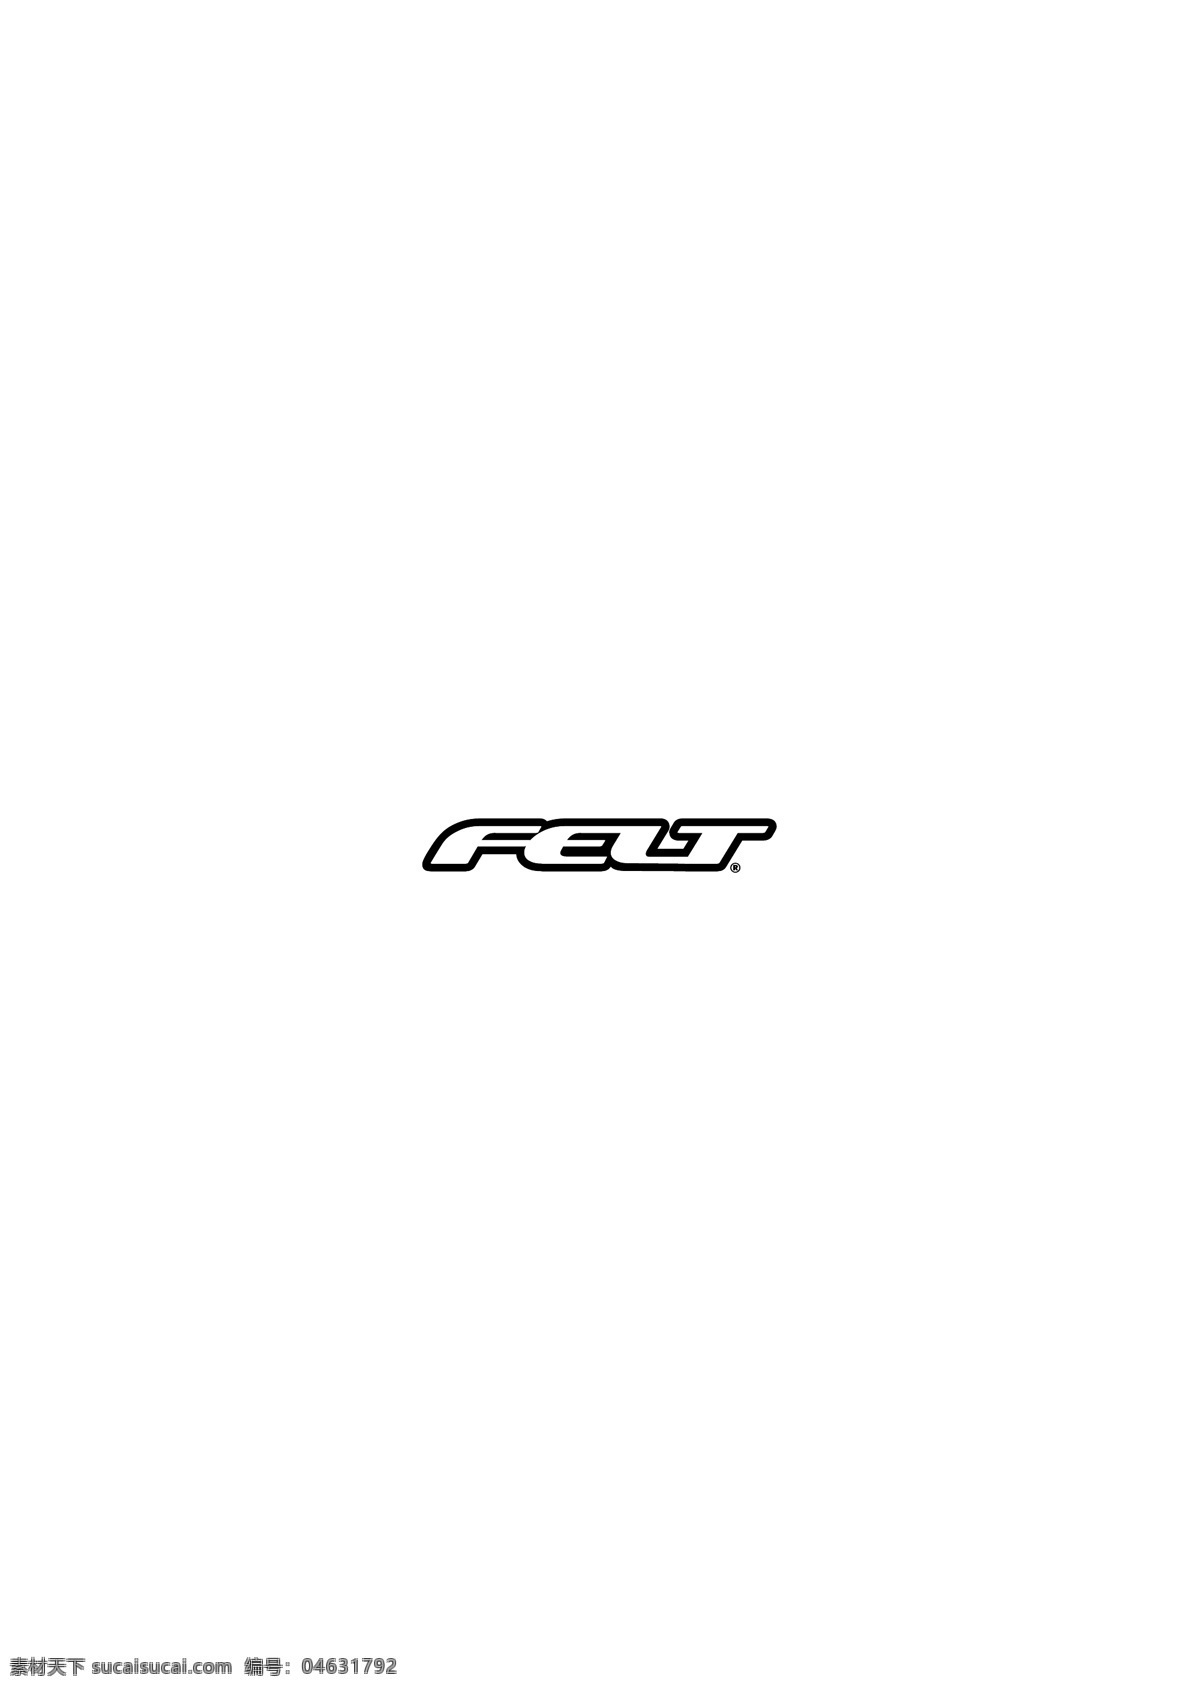 felt logo大全 logo 设计欣赏 商业矢量 矢量下载 体育 比赛 标志设计 欣赏 网页矢量 矢量图 其他矢量图